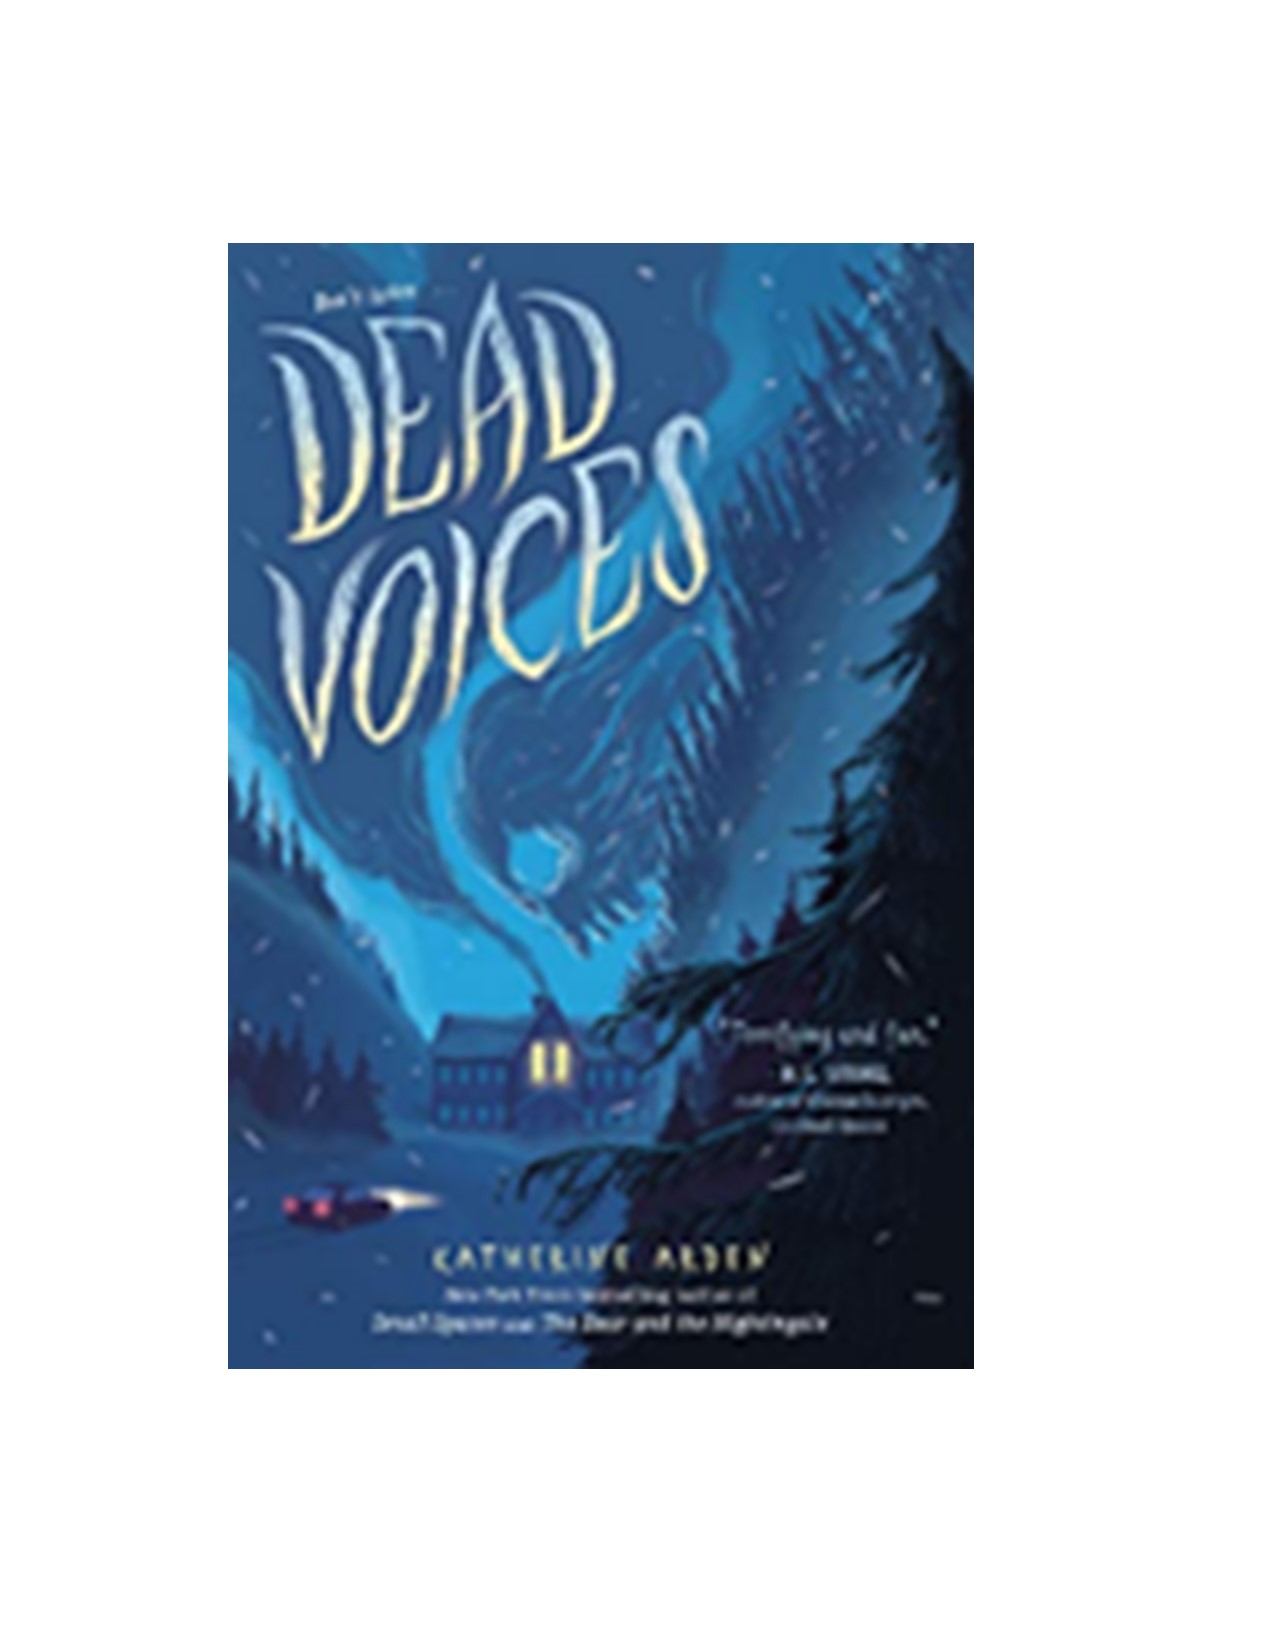 dead voices book cover